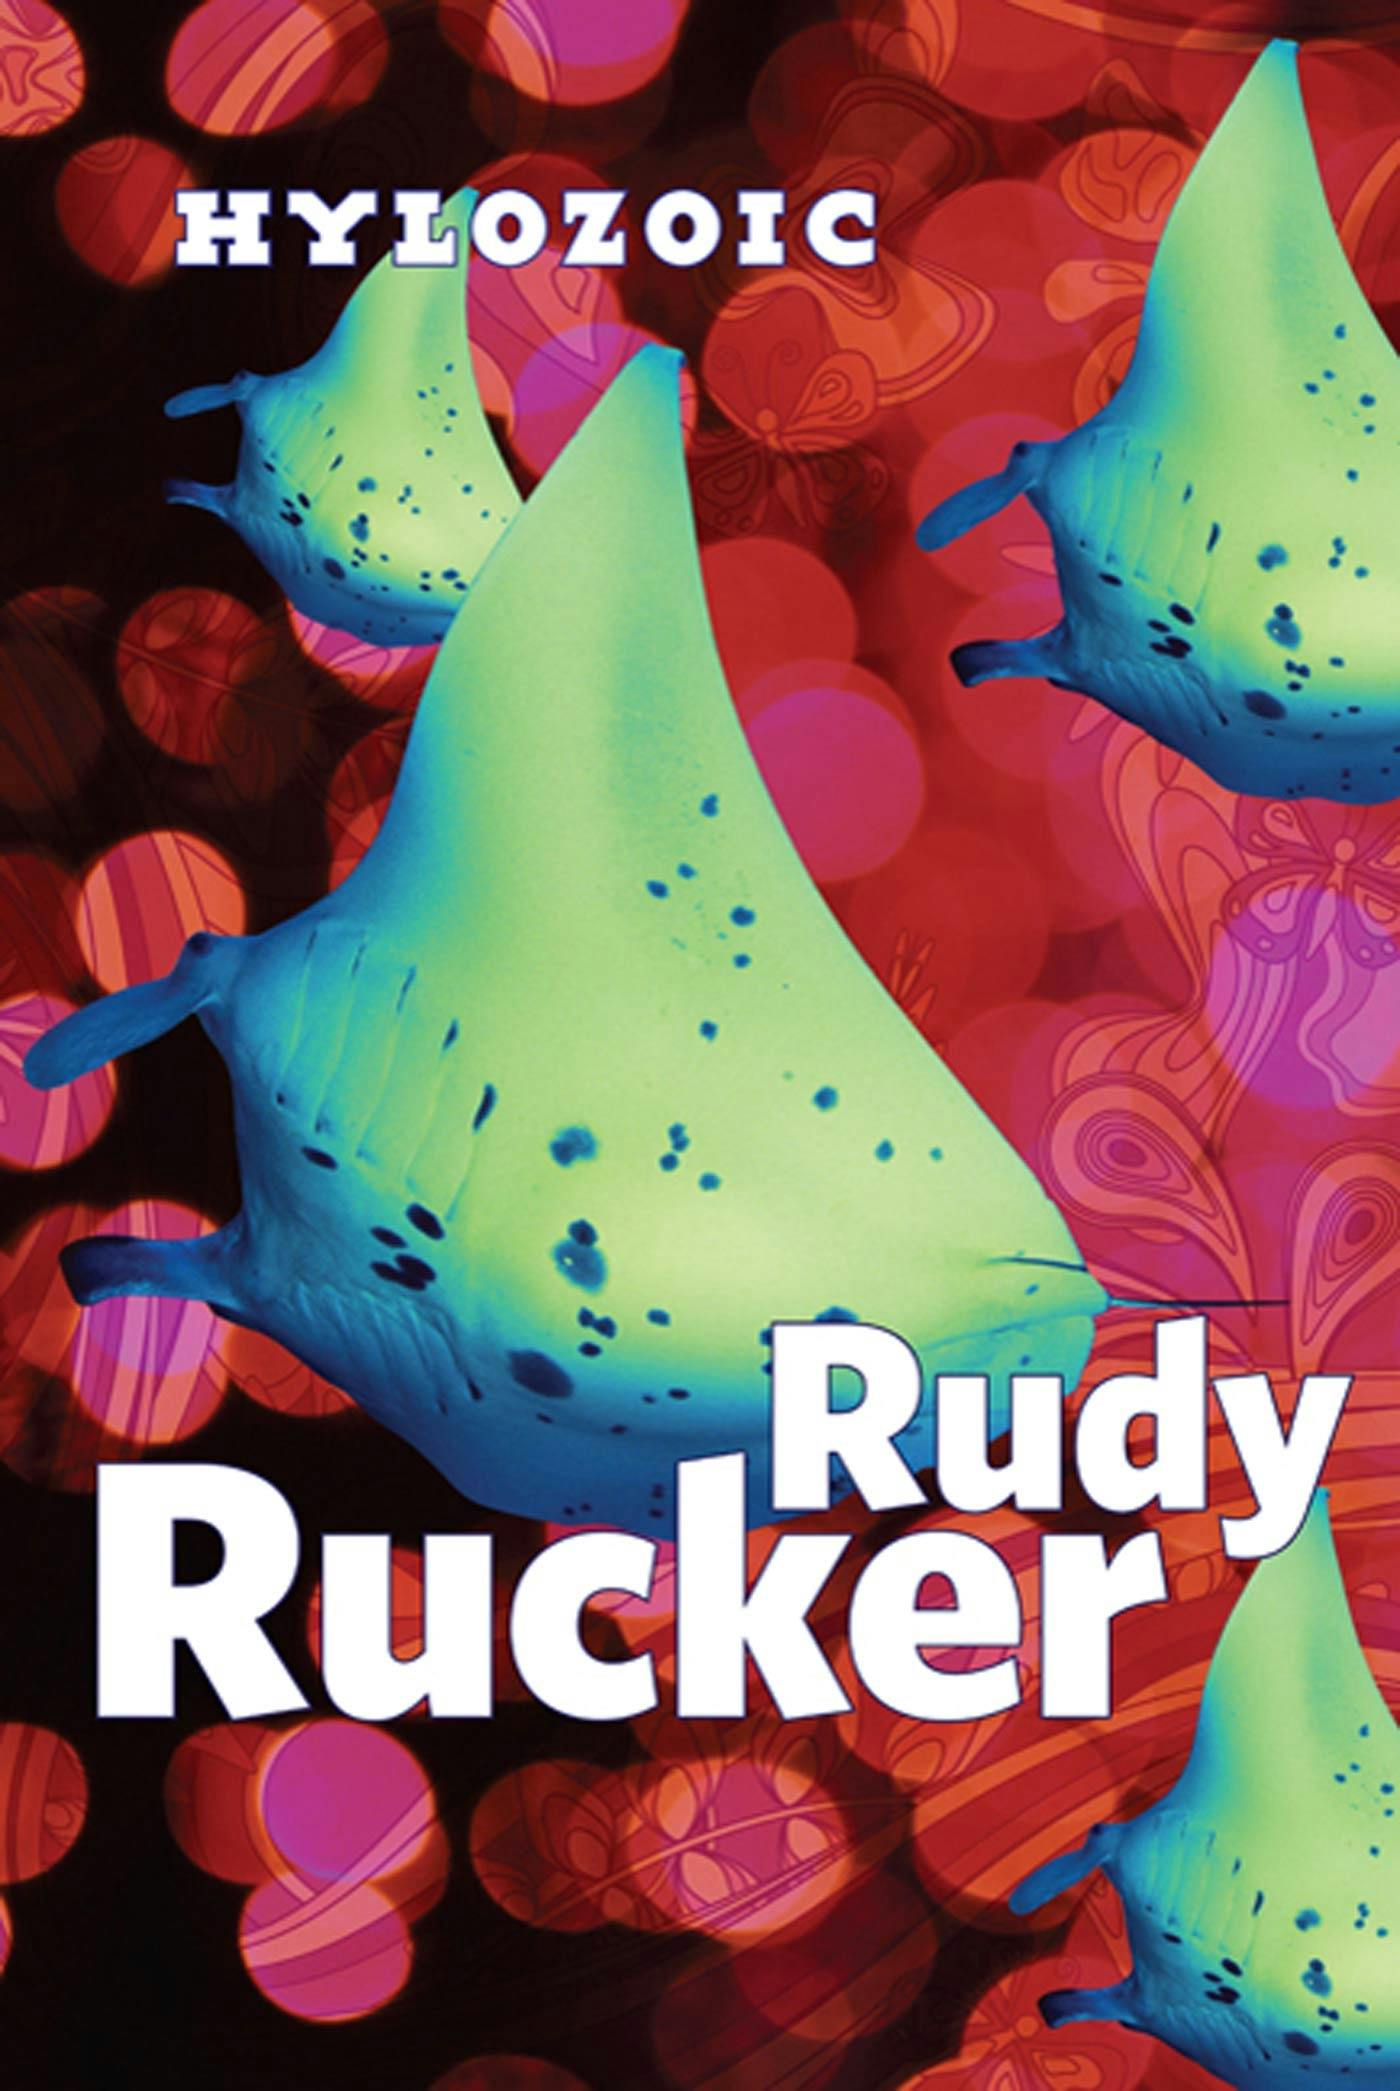 POSTSINGULAR by Rudy Rucker